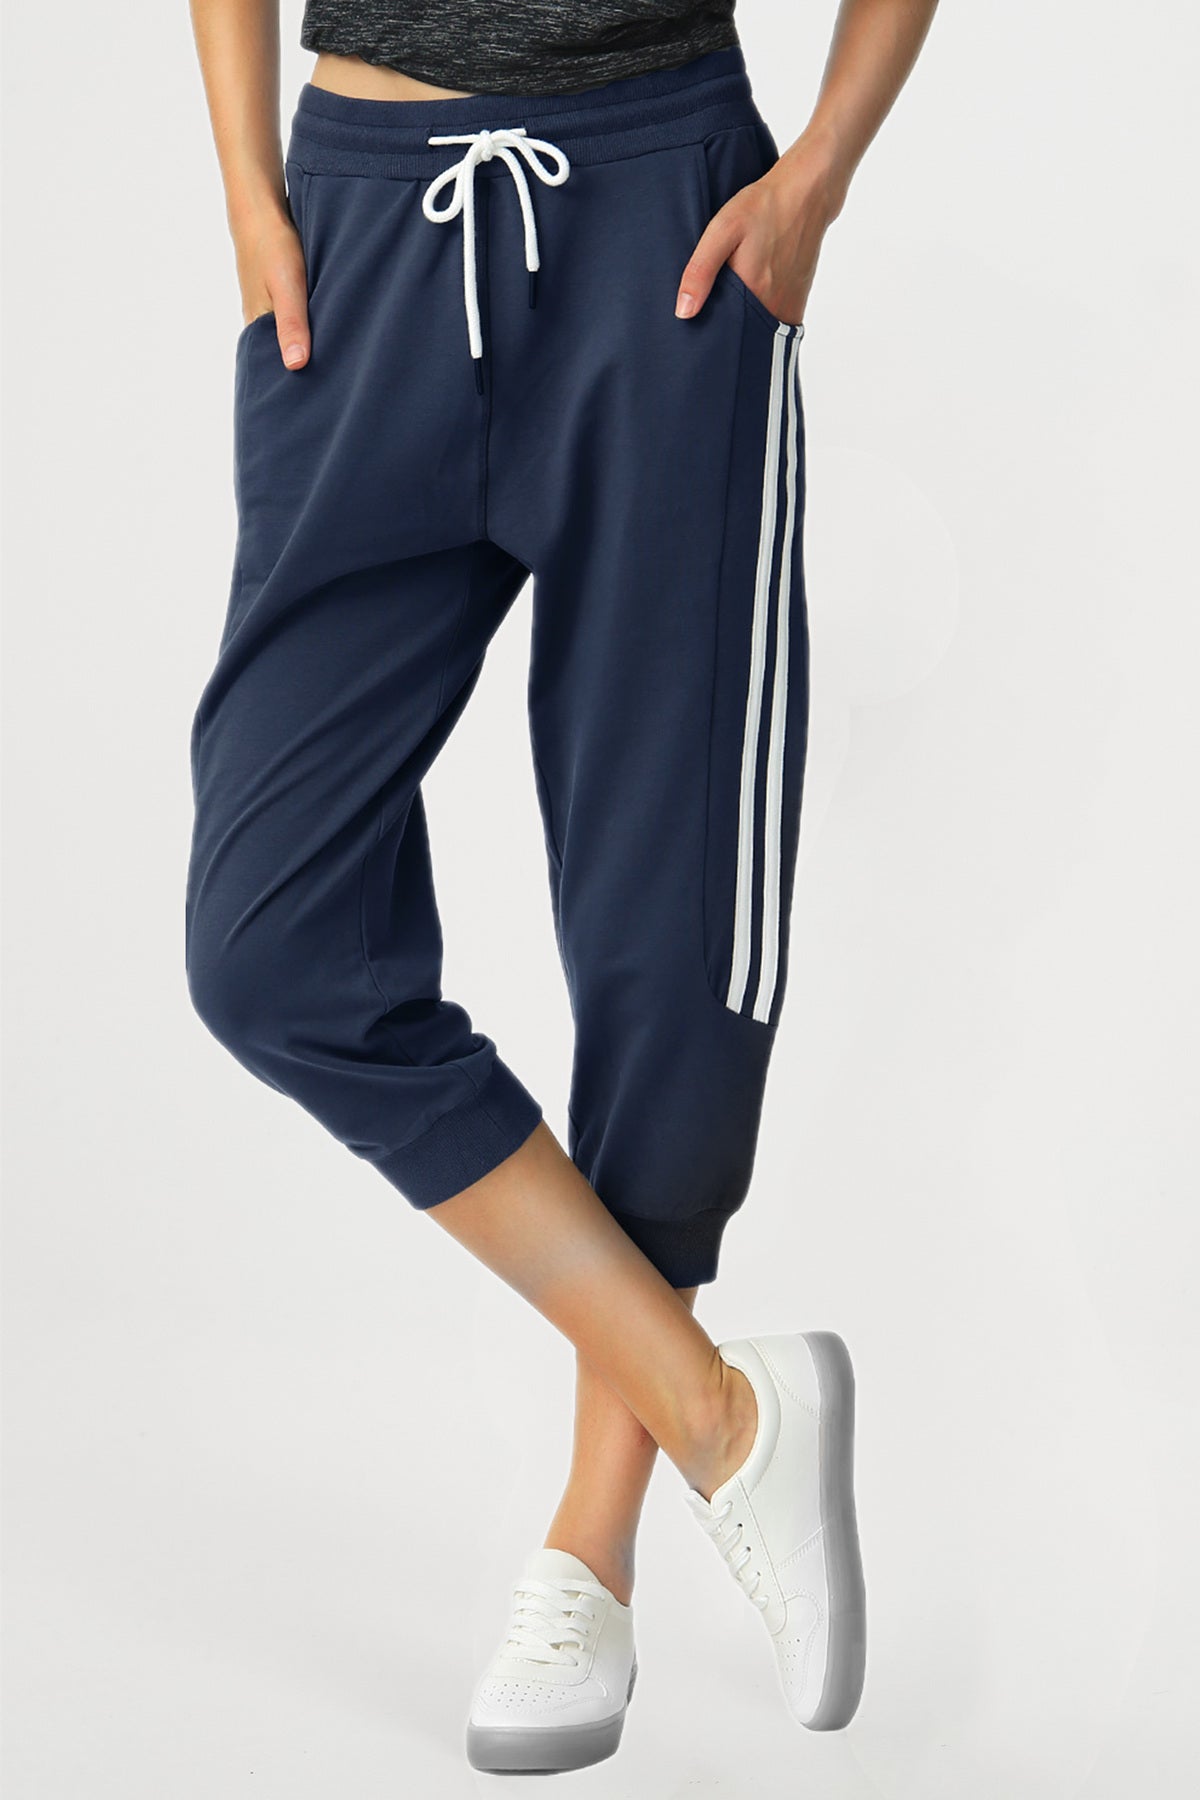 SPECIALMAGIC Women's Capri Sweatpants Cropped Joggers Cotton